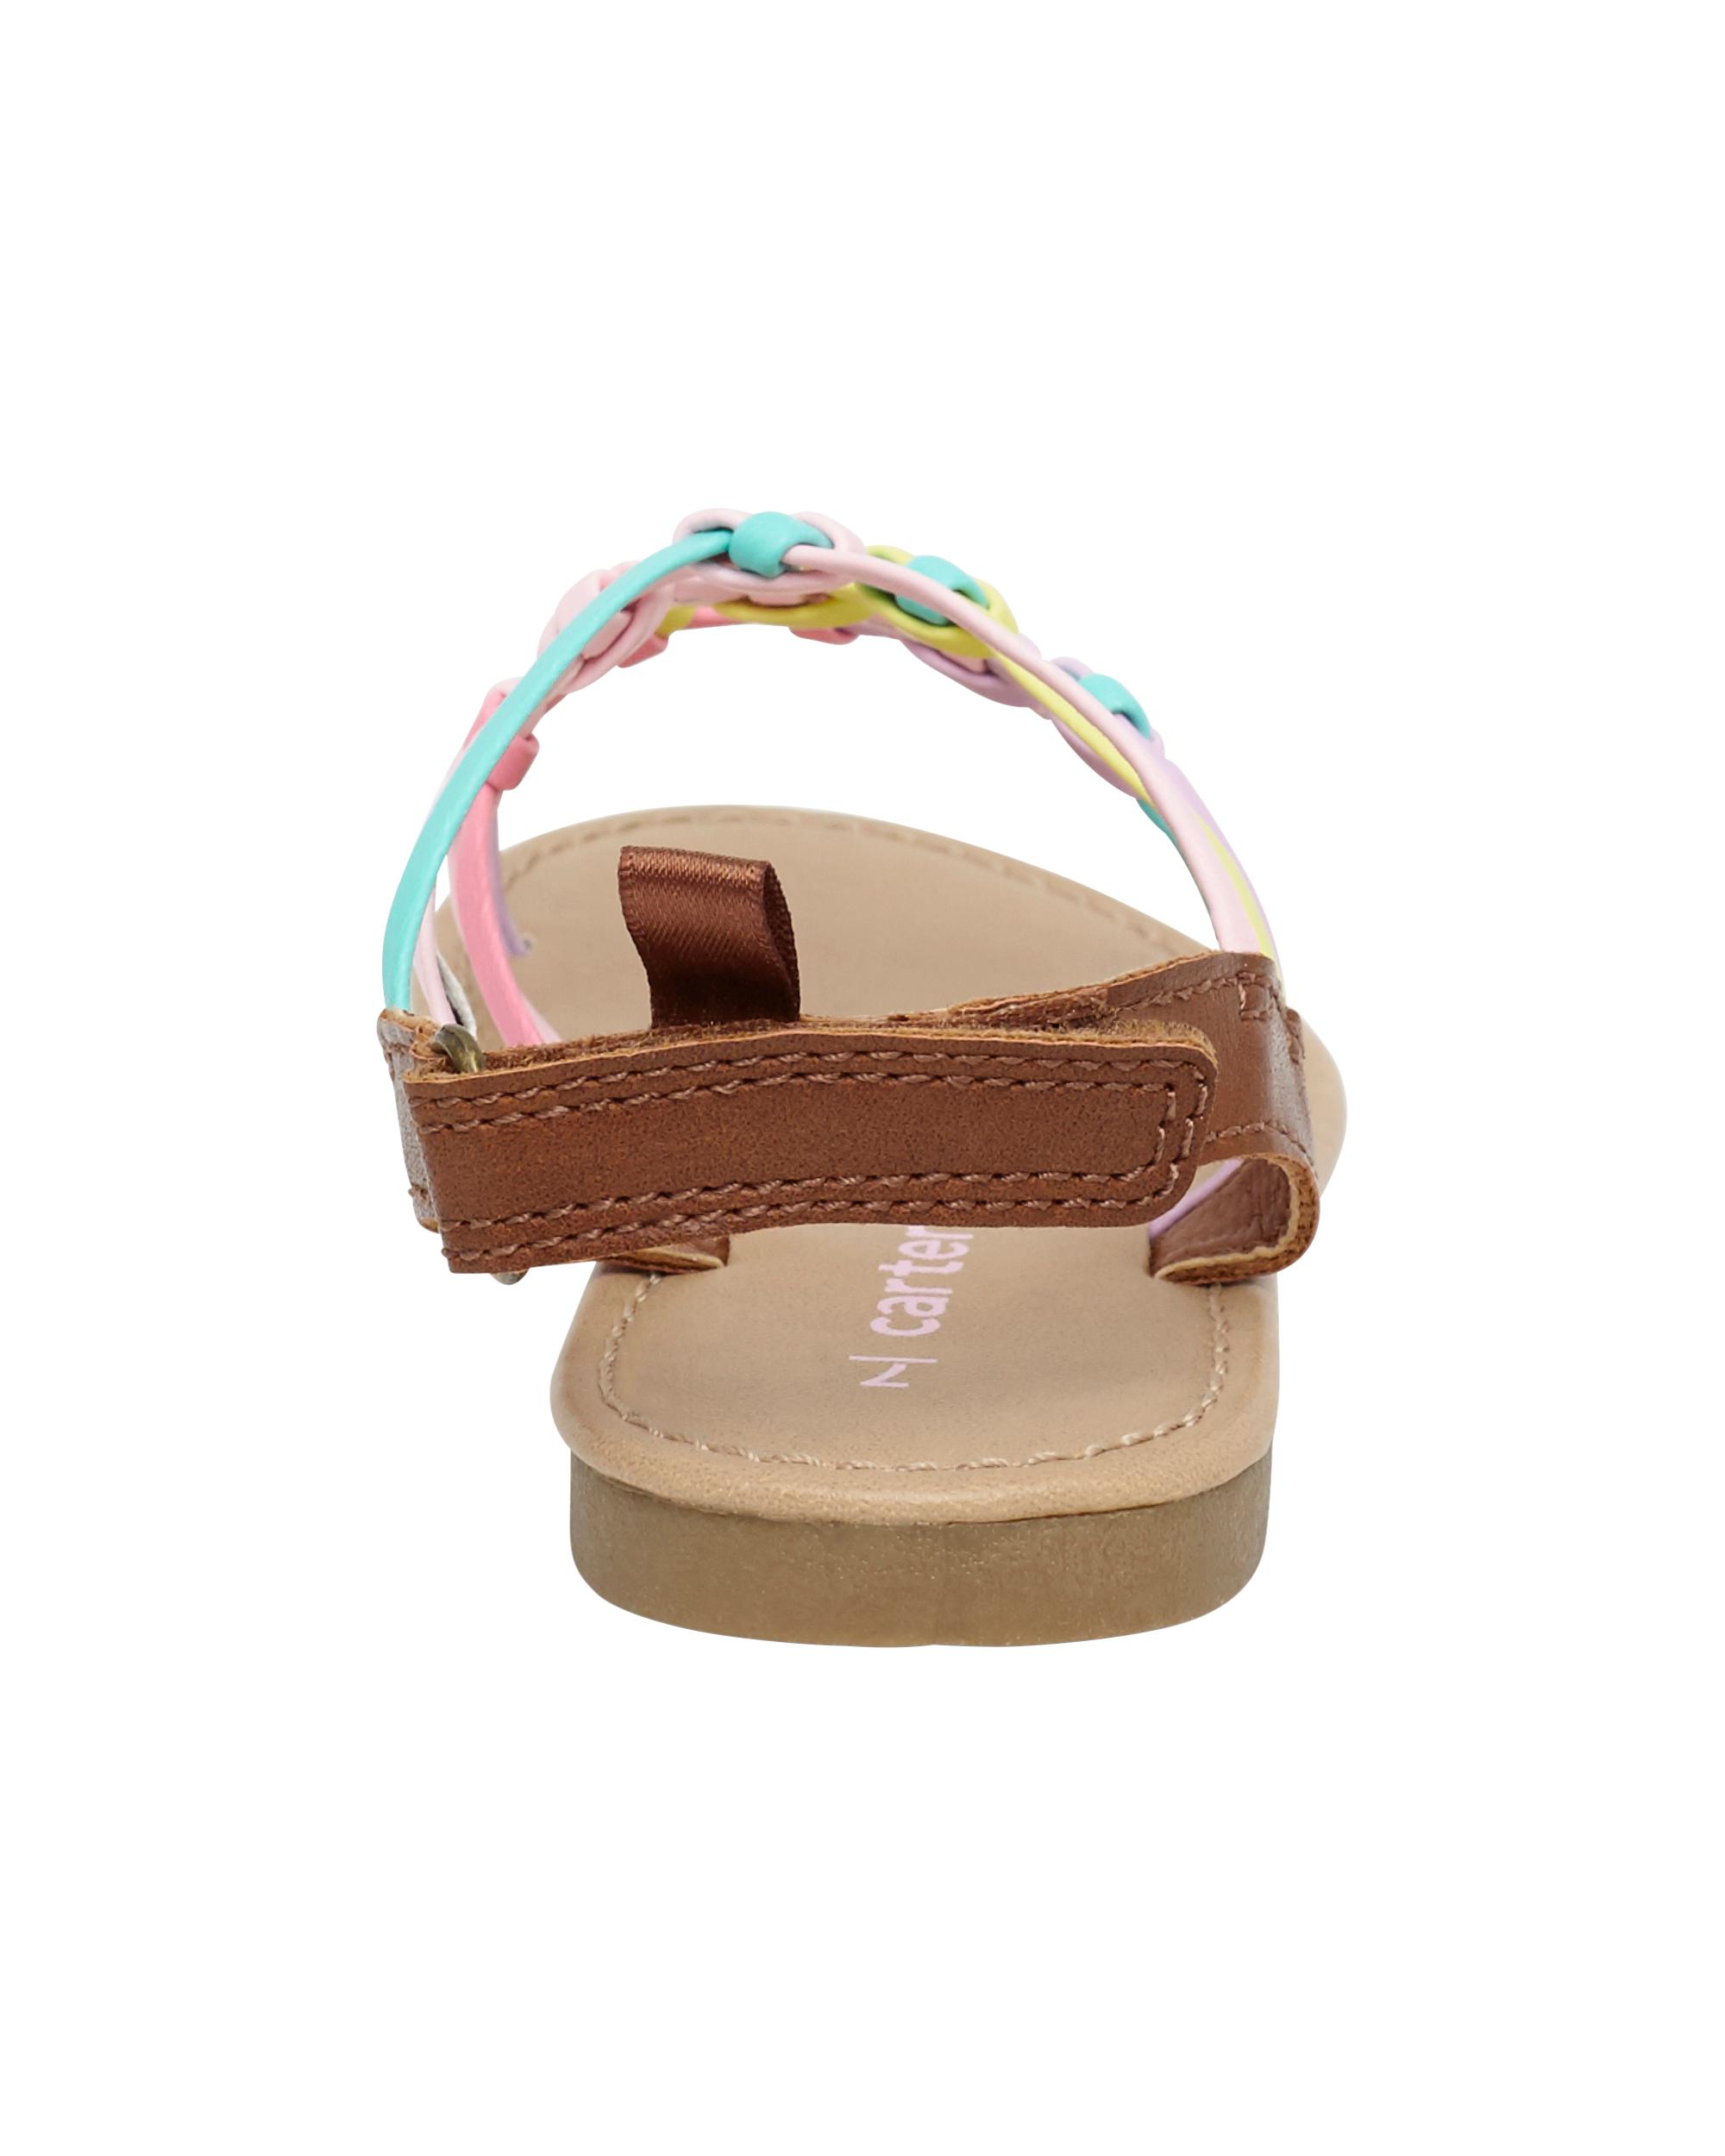 Toddler Rainbow Sandals